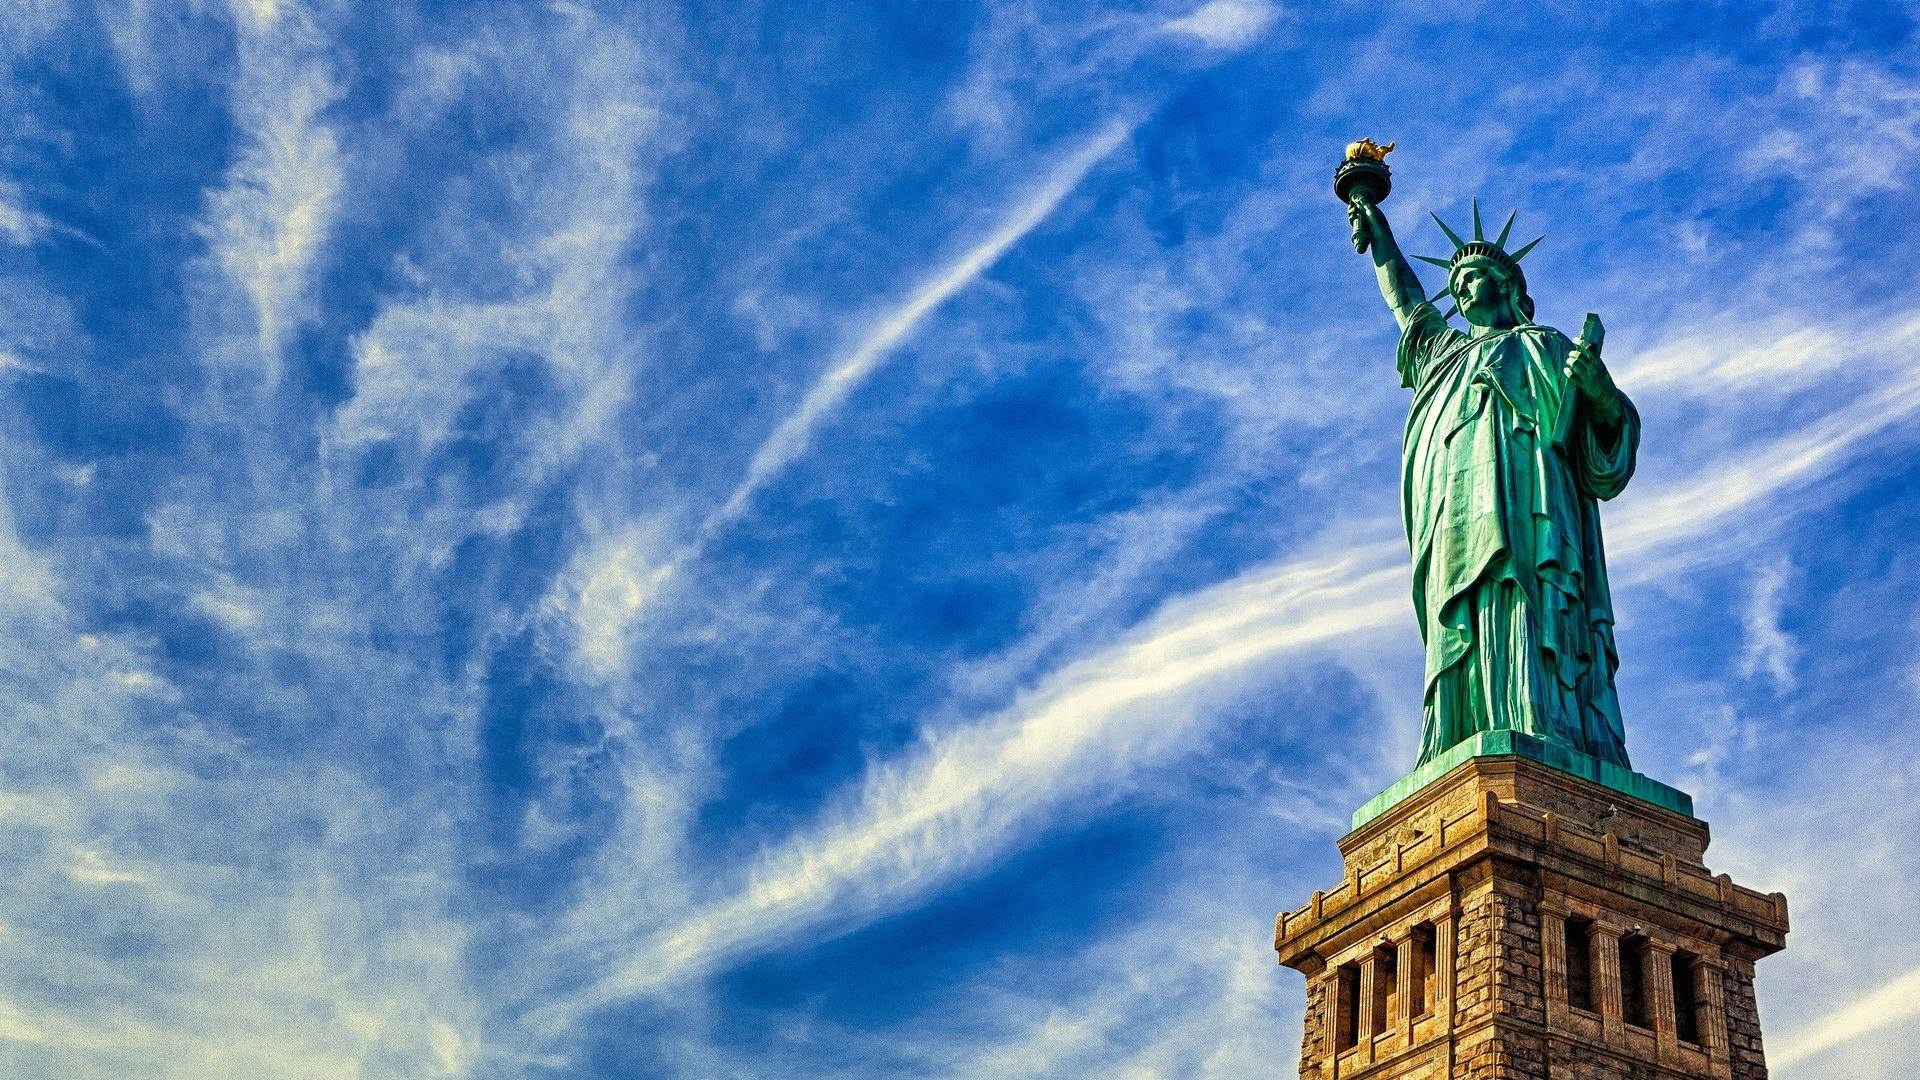 Statue Of Liberty Desktop Wallpaper 48968 1920x1080 px